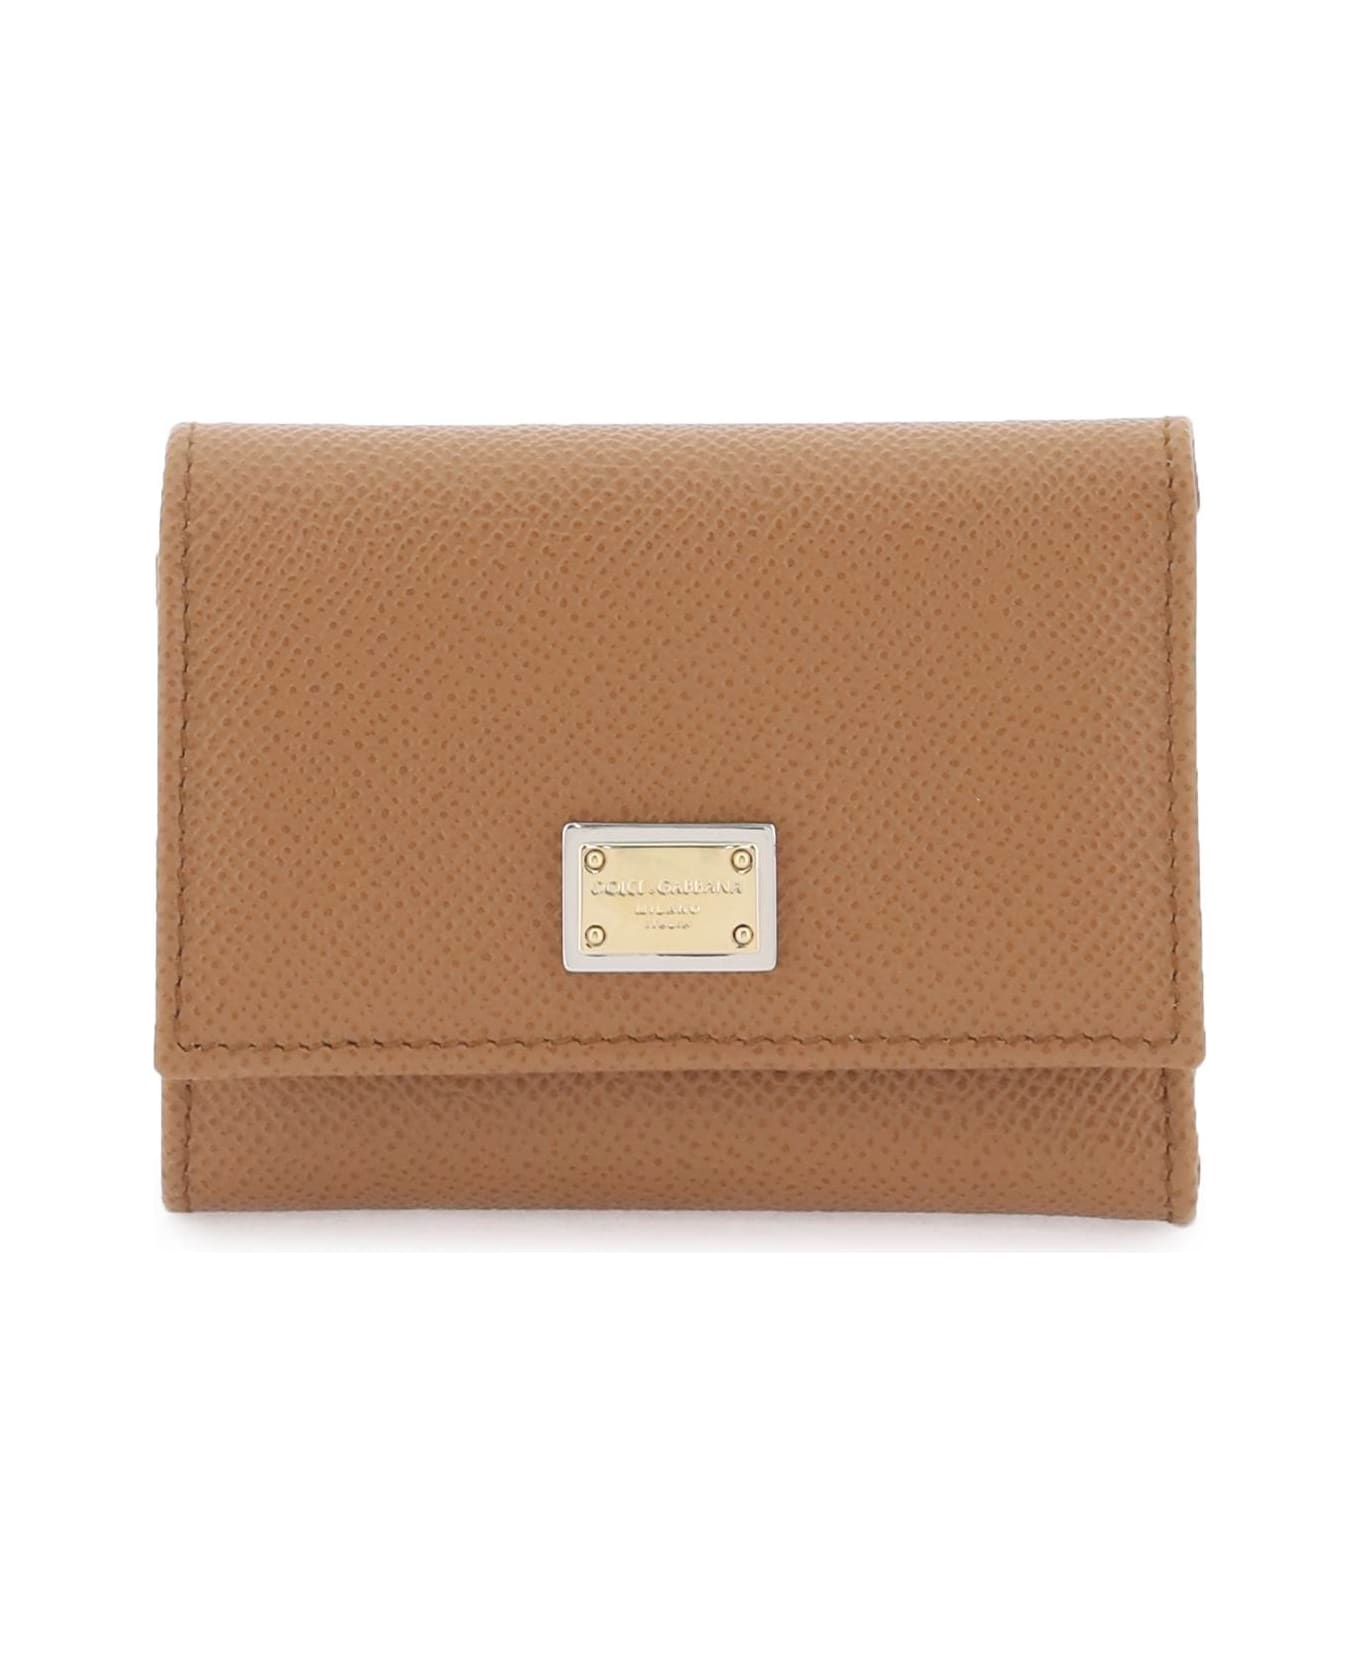 Dolce & Gabbana French Flap Wallet - CARAMELLO (Brown)